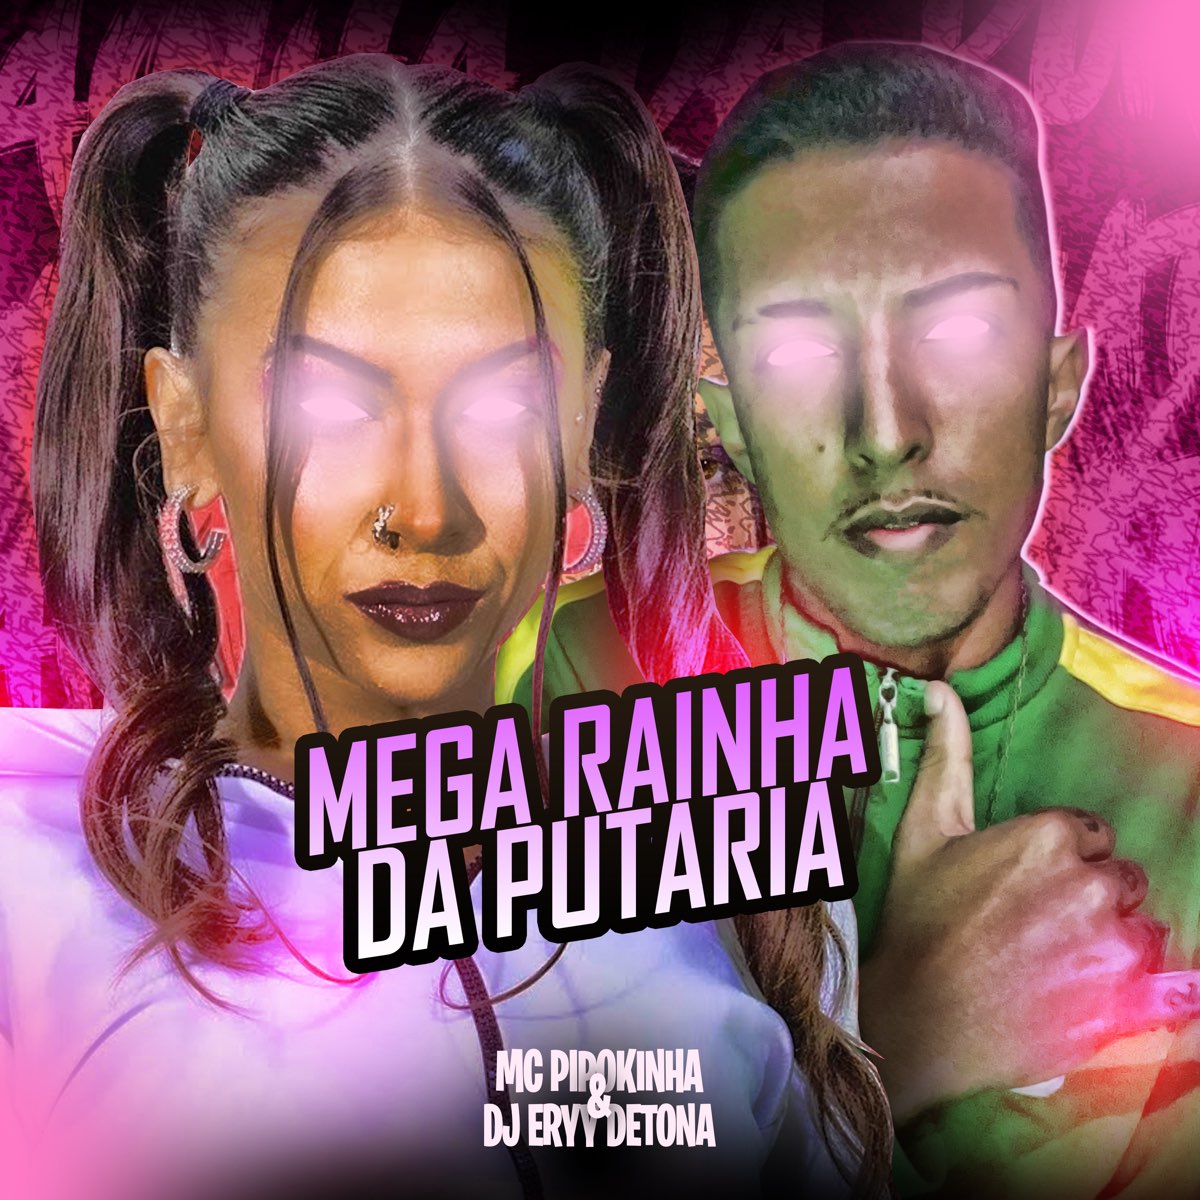 ‎mega Rainha Da Putaria Feat Mc Pipokinha Single De Dj Eryy Detona No Apple Music